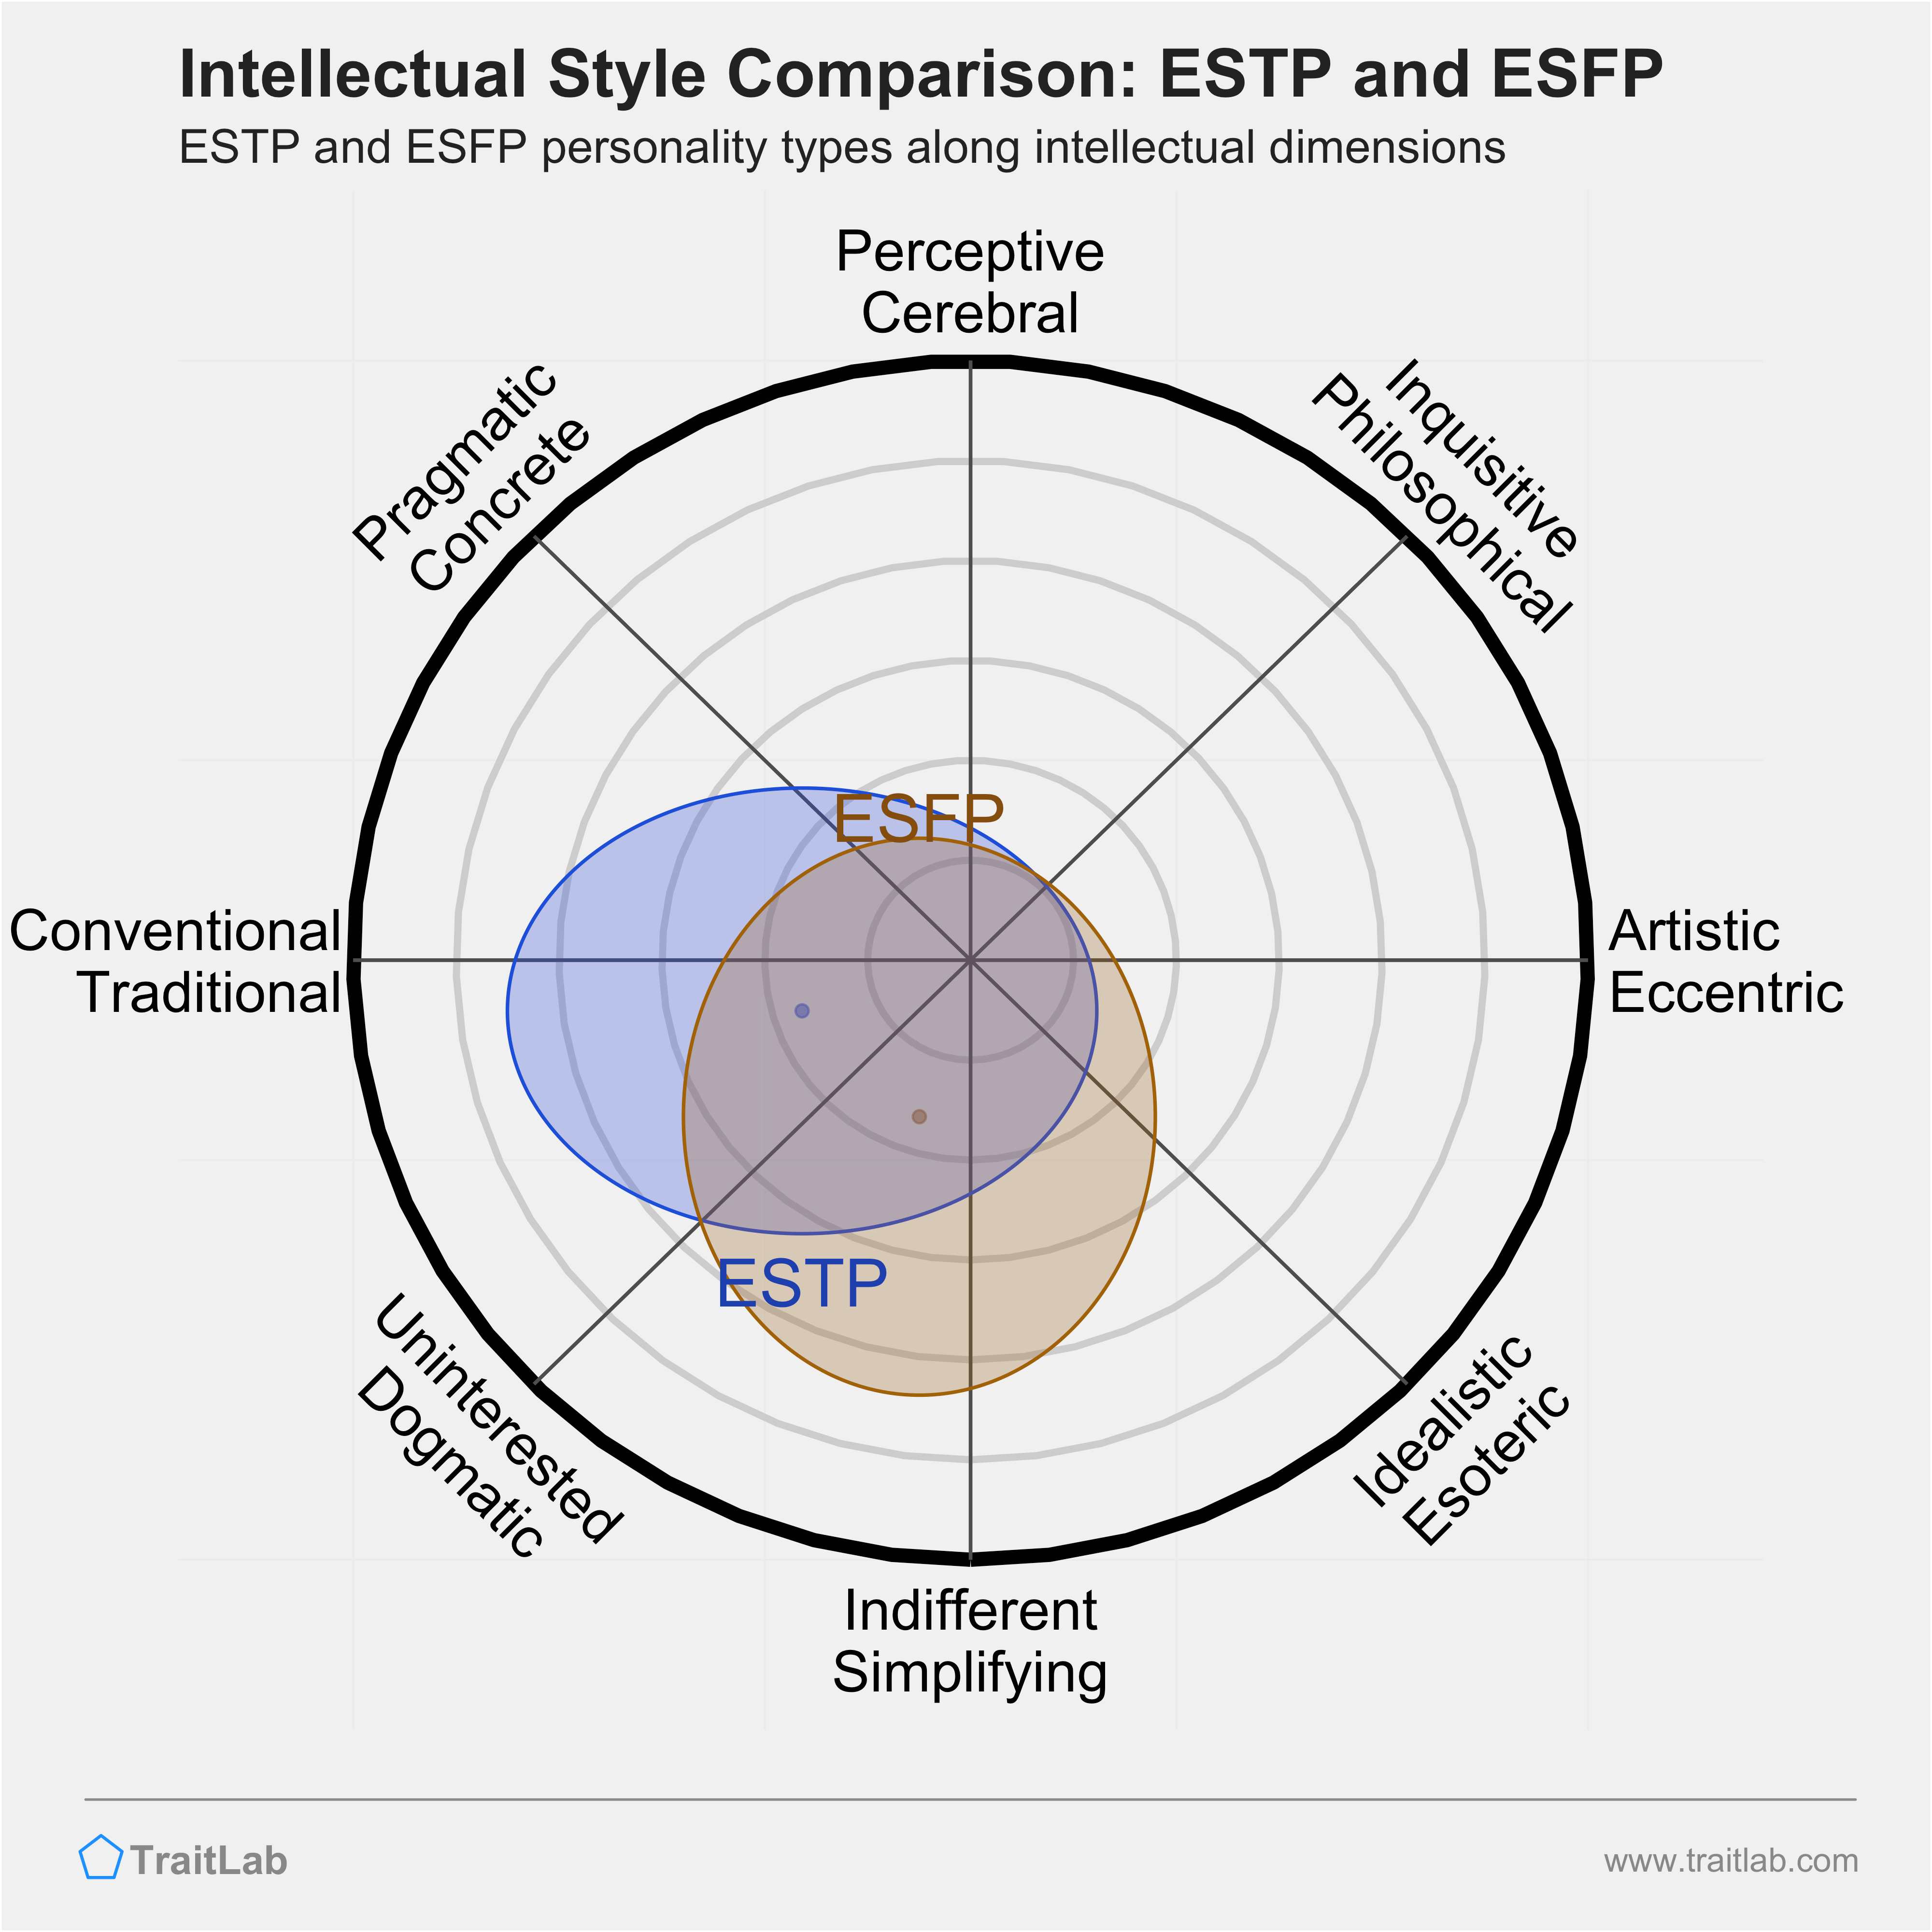 ESTP and ESFP comparison across intellectual dimensions